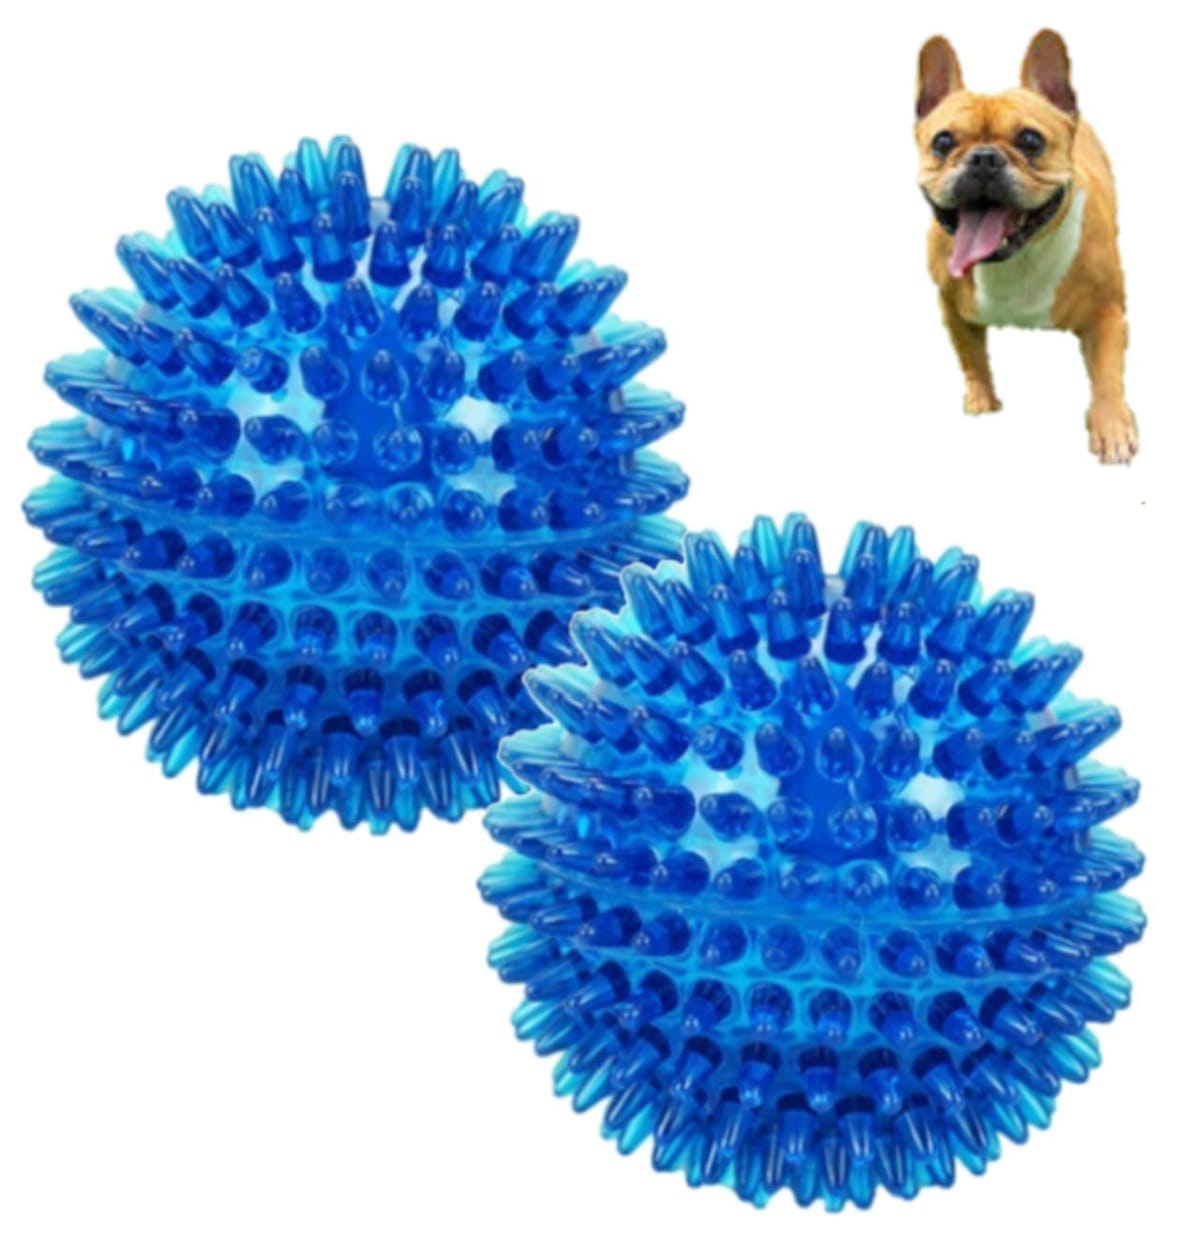 heizi 犬 遊び道具 小型犬 いぬのおもちゃ ボール 6cm 2個セット おもちゃ 犬の遊び道具 天然素材